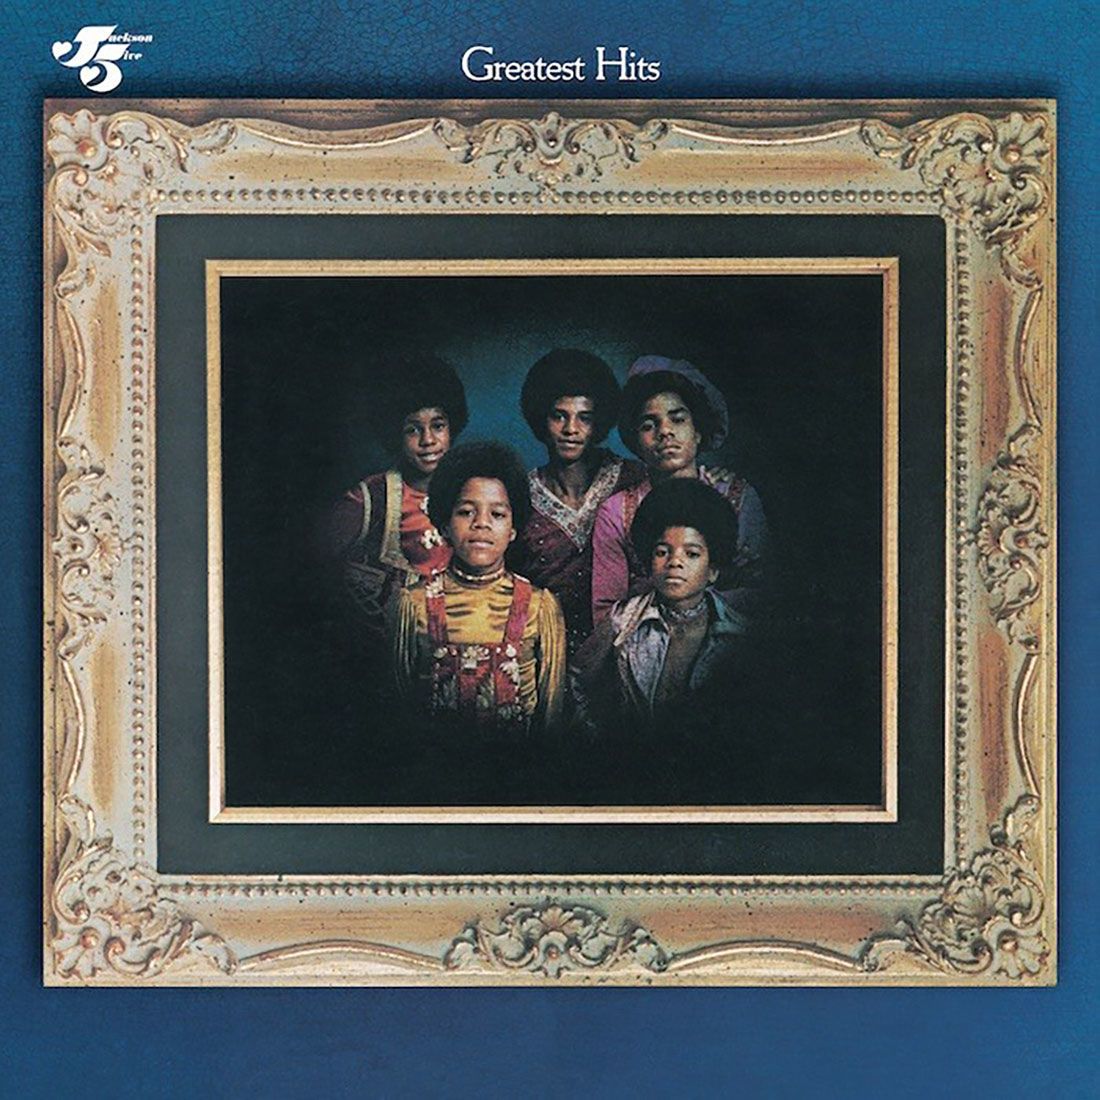 Jackson 5 - Greatest Hits (Quadraphonic Mix): Vinyl LP